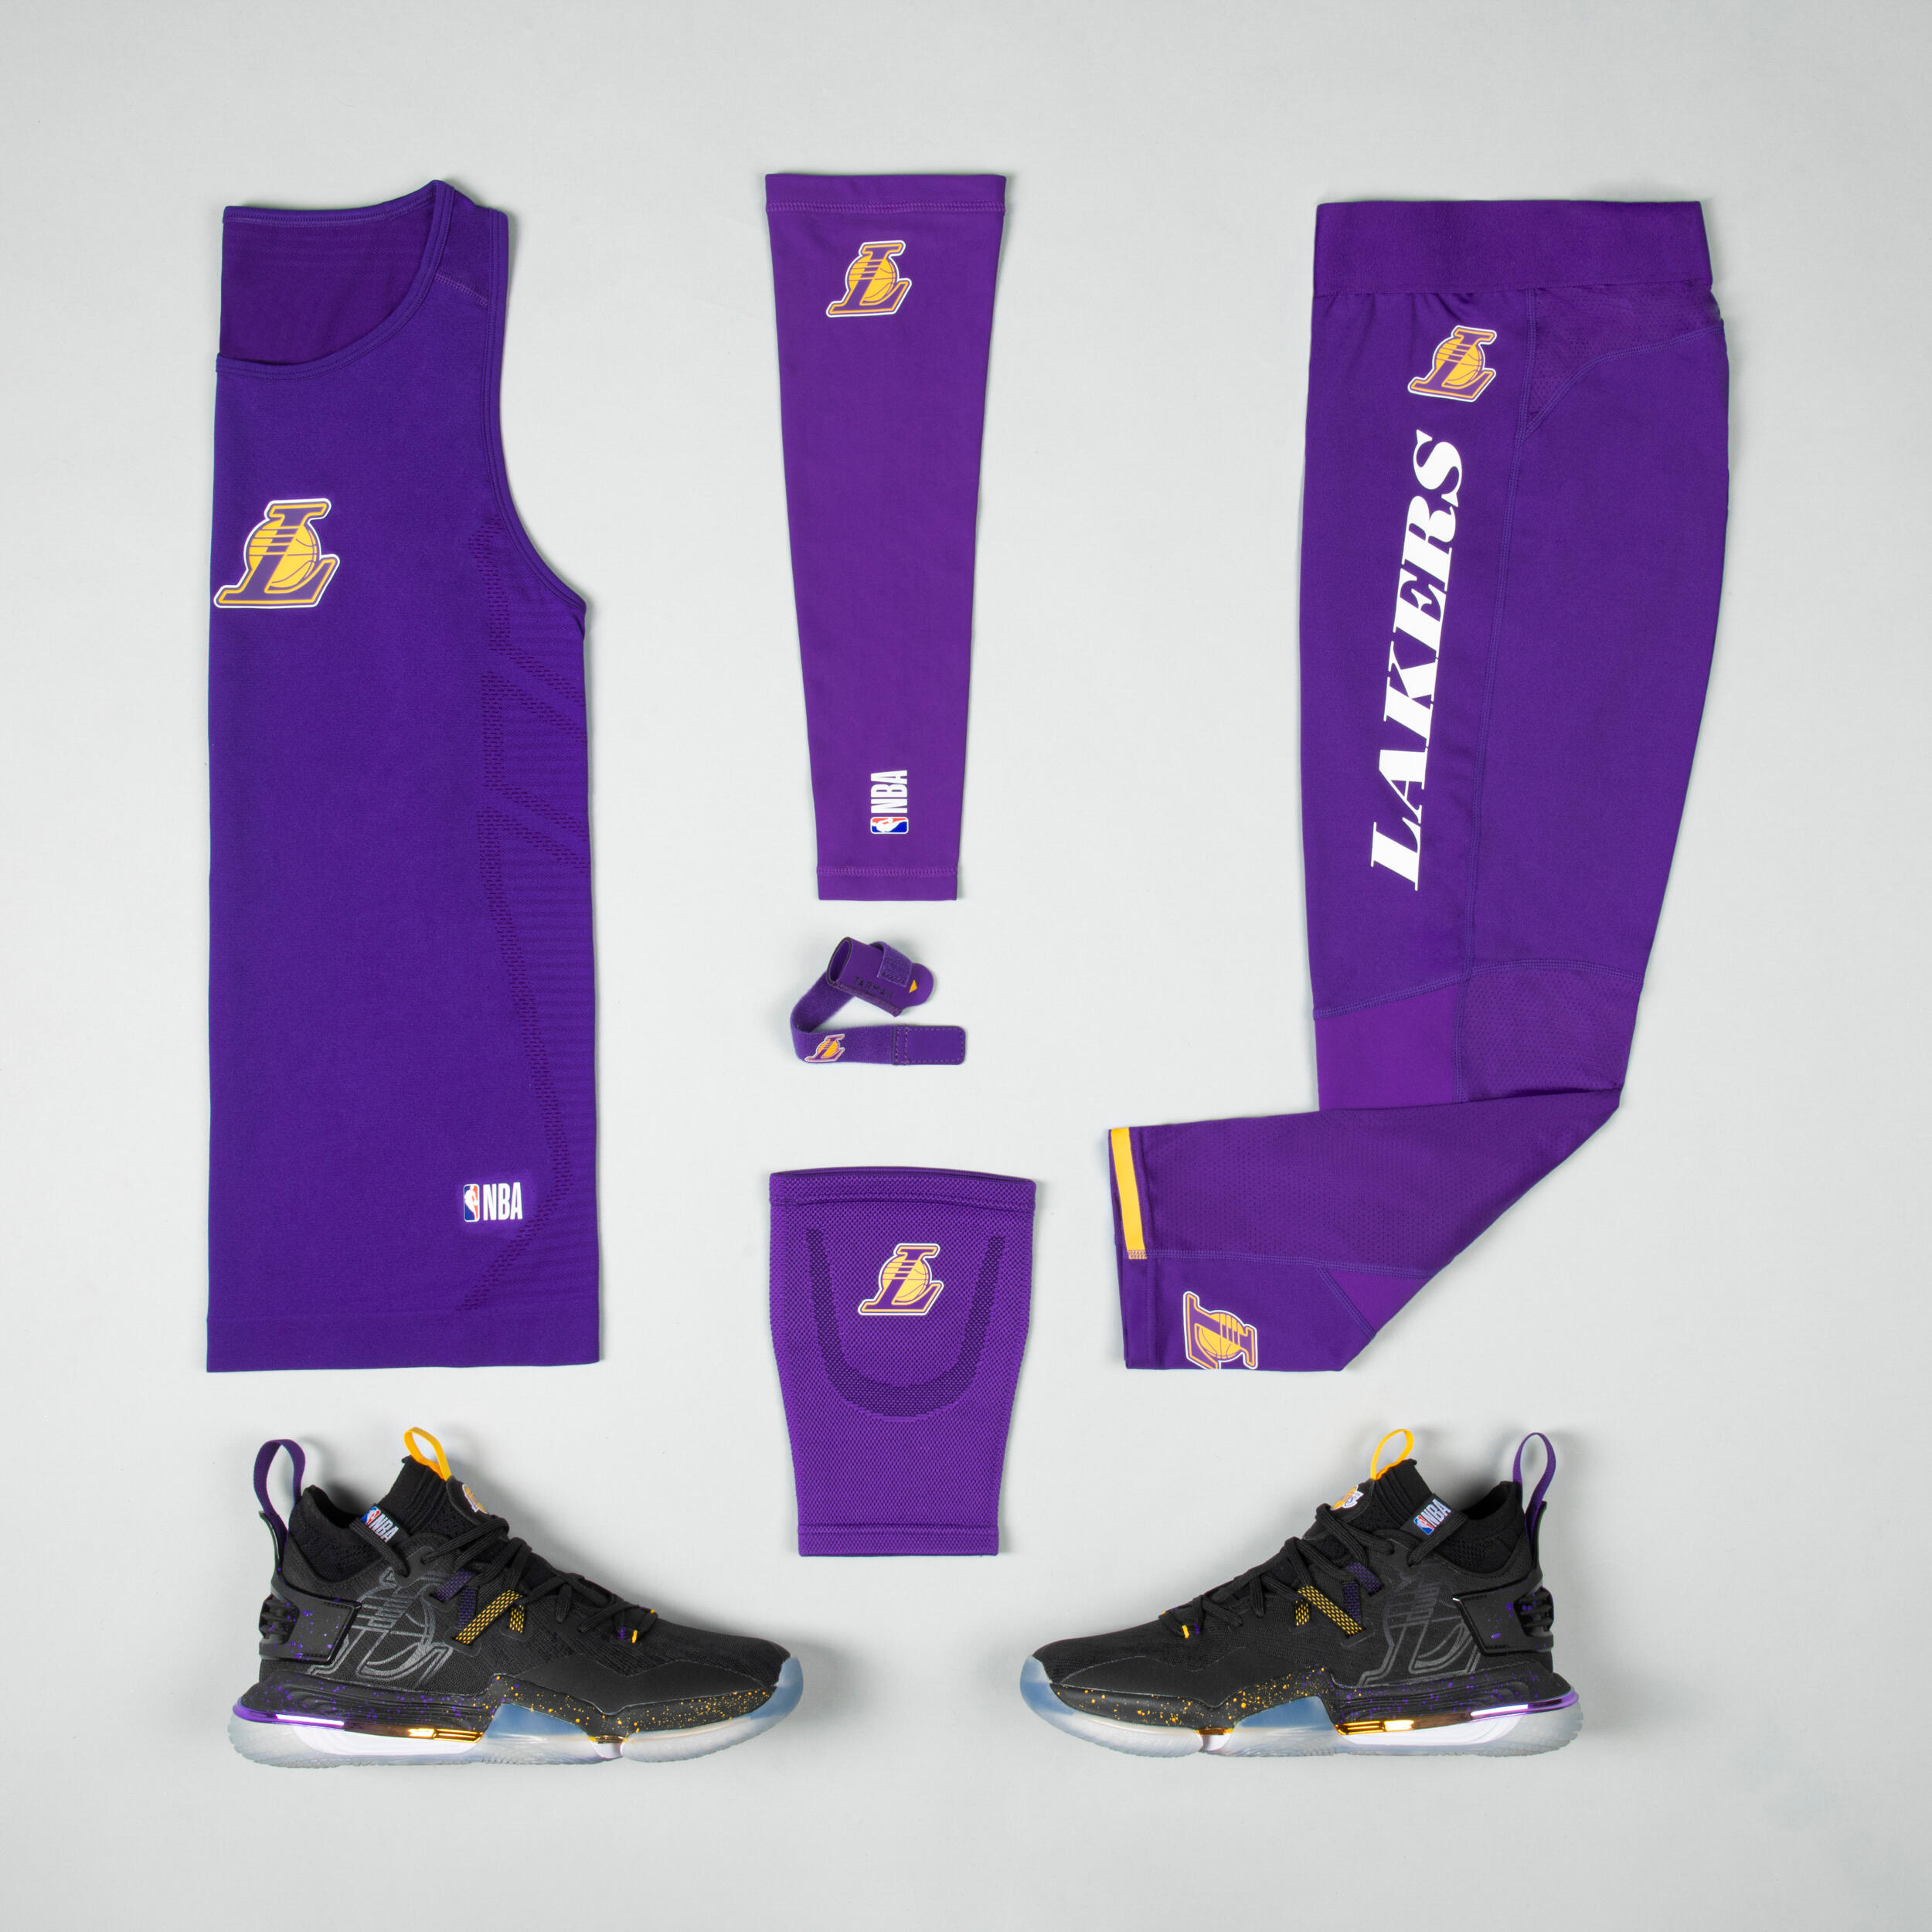 Buy Basketball Elbow Guard E500 - Purple/Nba Los Angeles Lakers Online